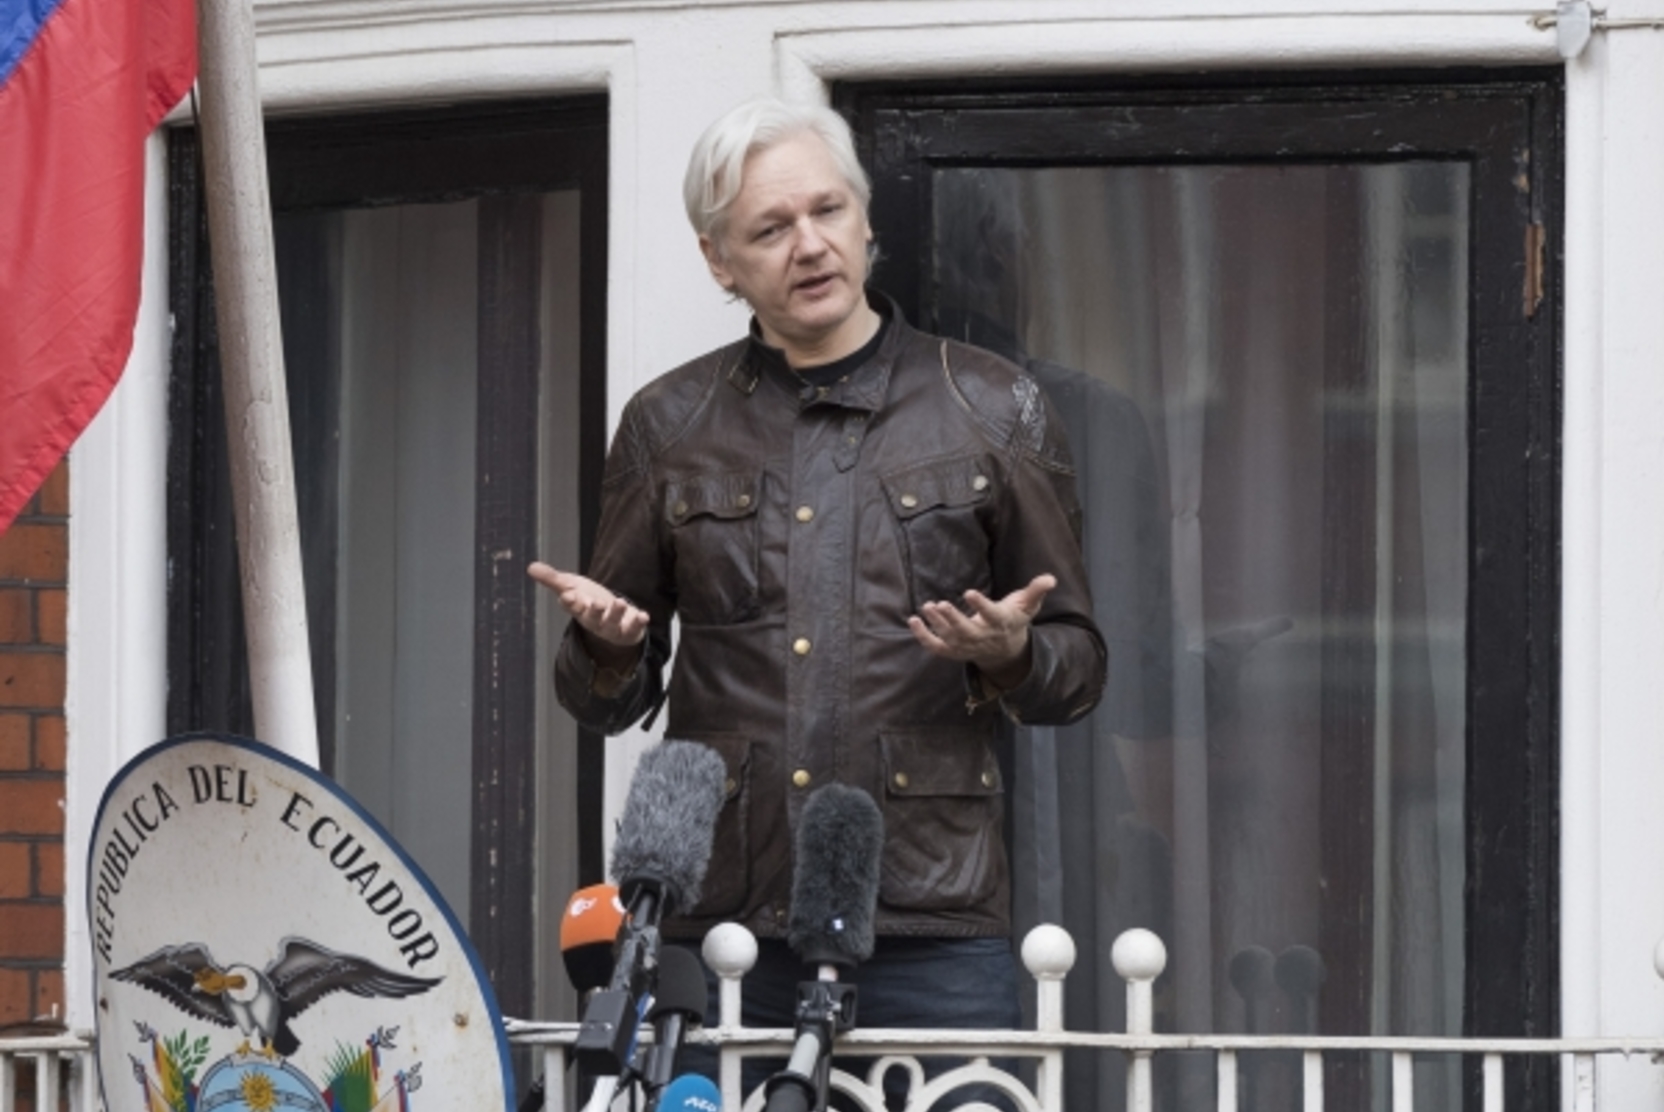 Мексика предложила политическое убежище основателю Wikileaks Ассанжу